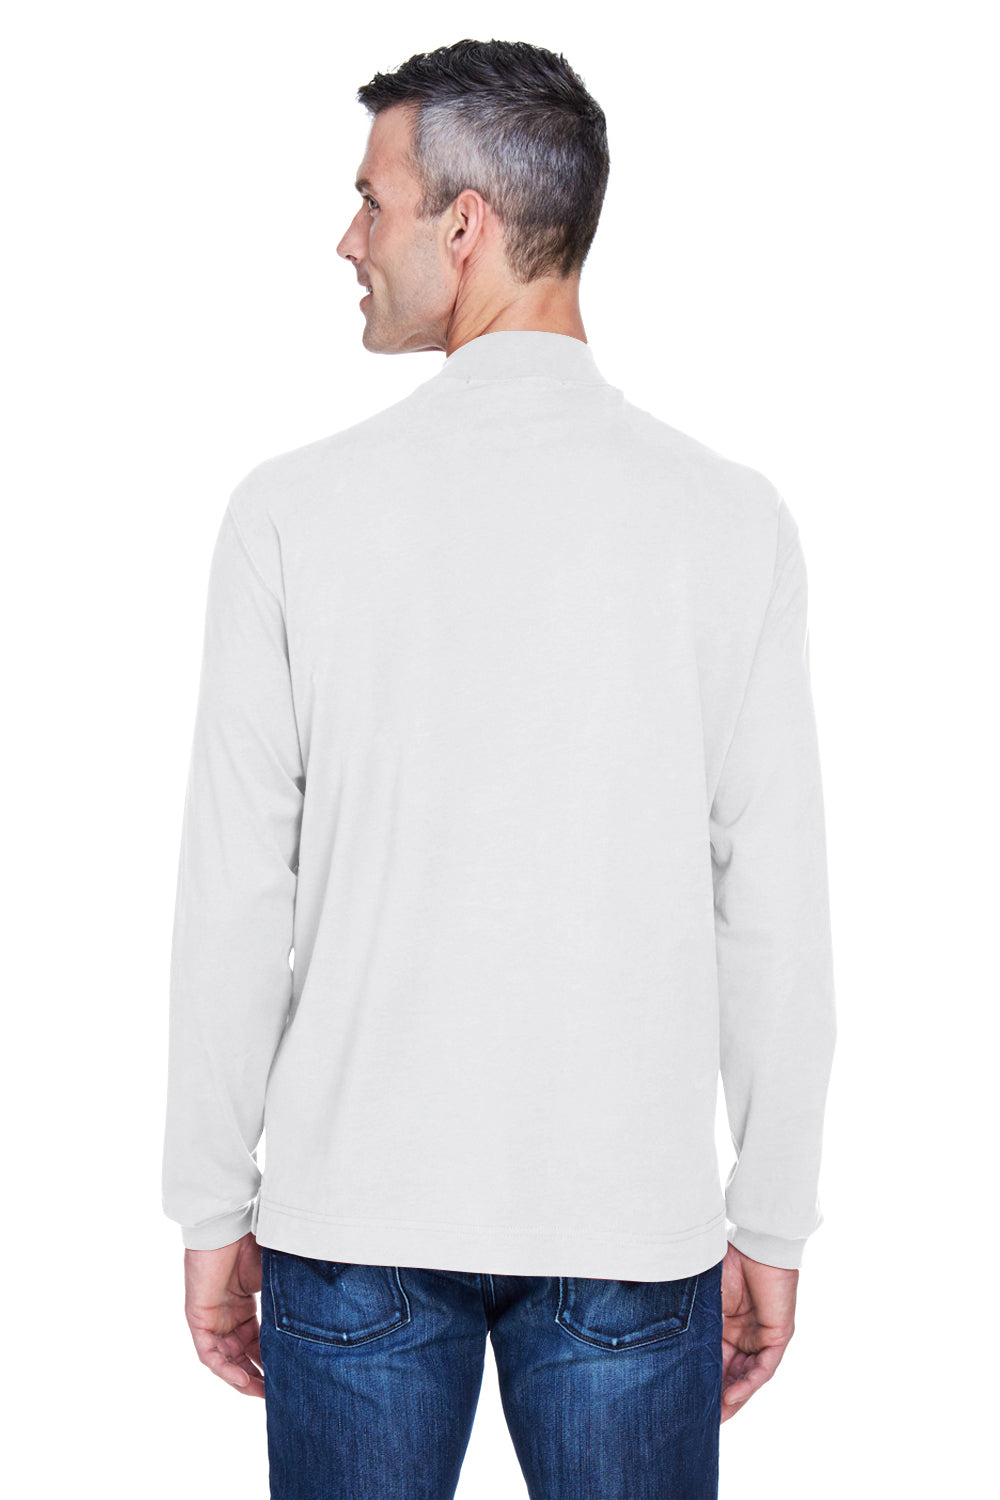 Devon & Jones D420 Mens Sueded Jersey Long Sleeve Mock Neck T-Shirt White Back